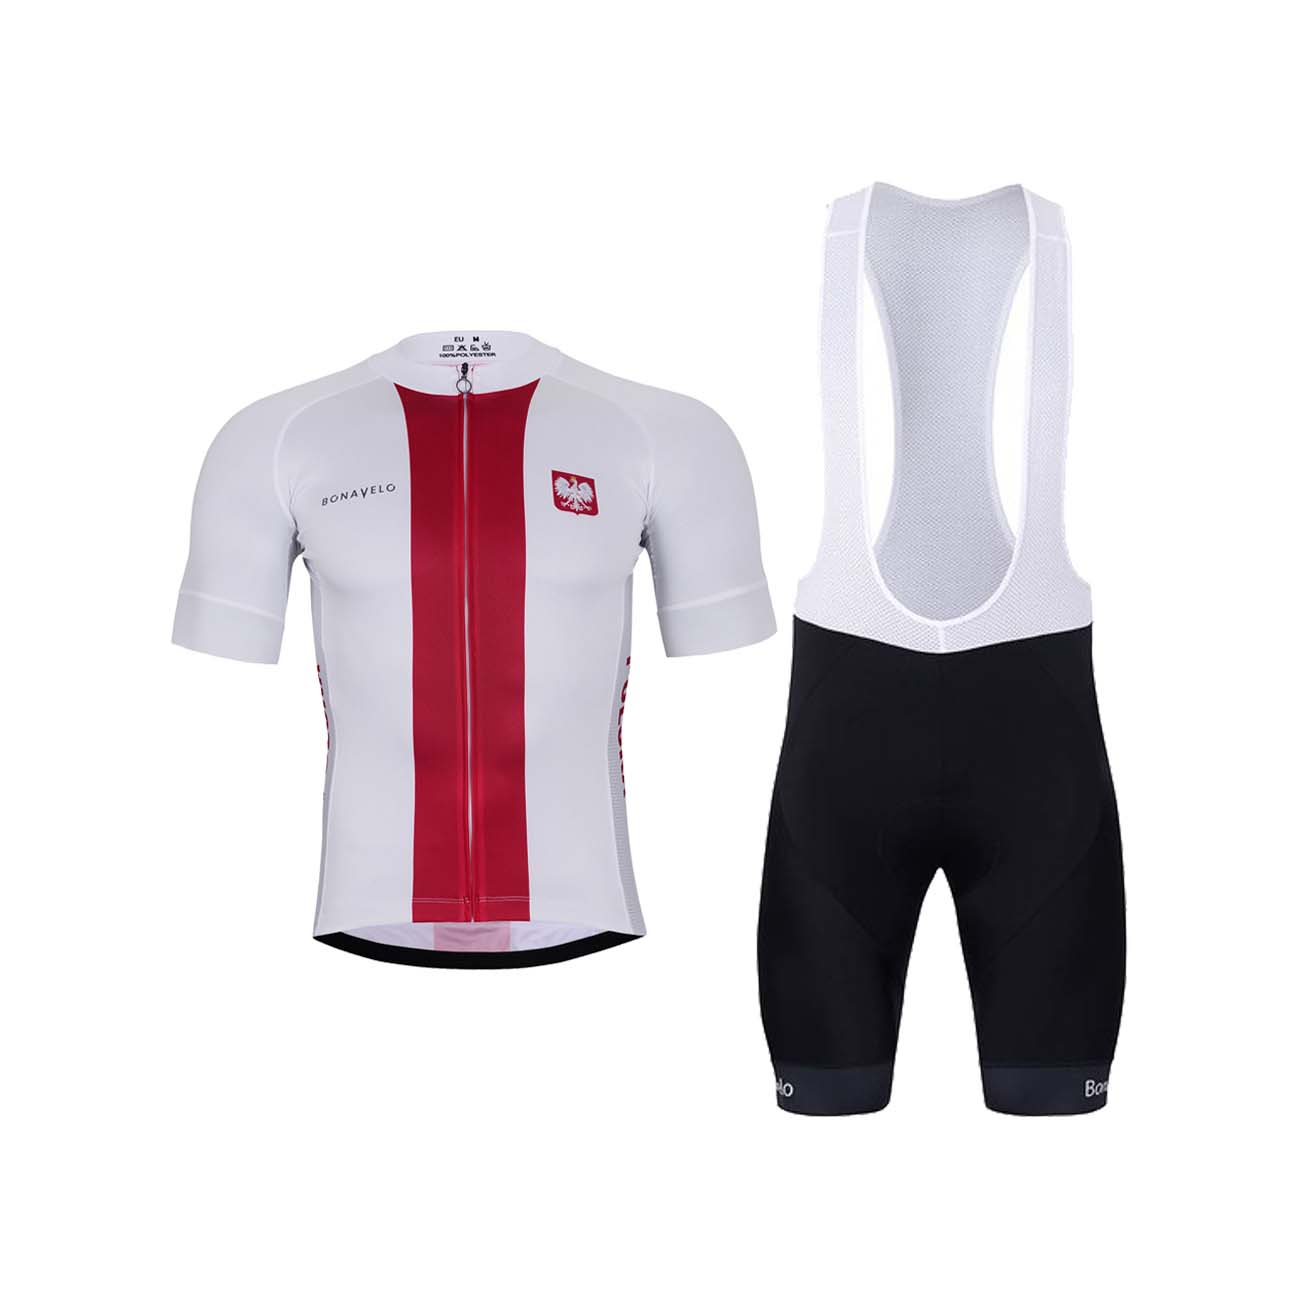 
                BONAVELO Cyklistický krátký dres a krátké kalhoty - POLAND I. - bílá/červená/černá
            